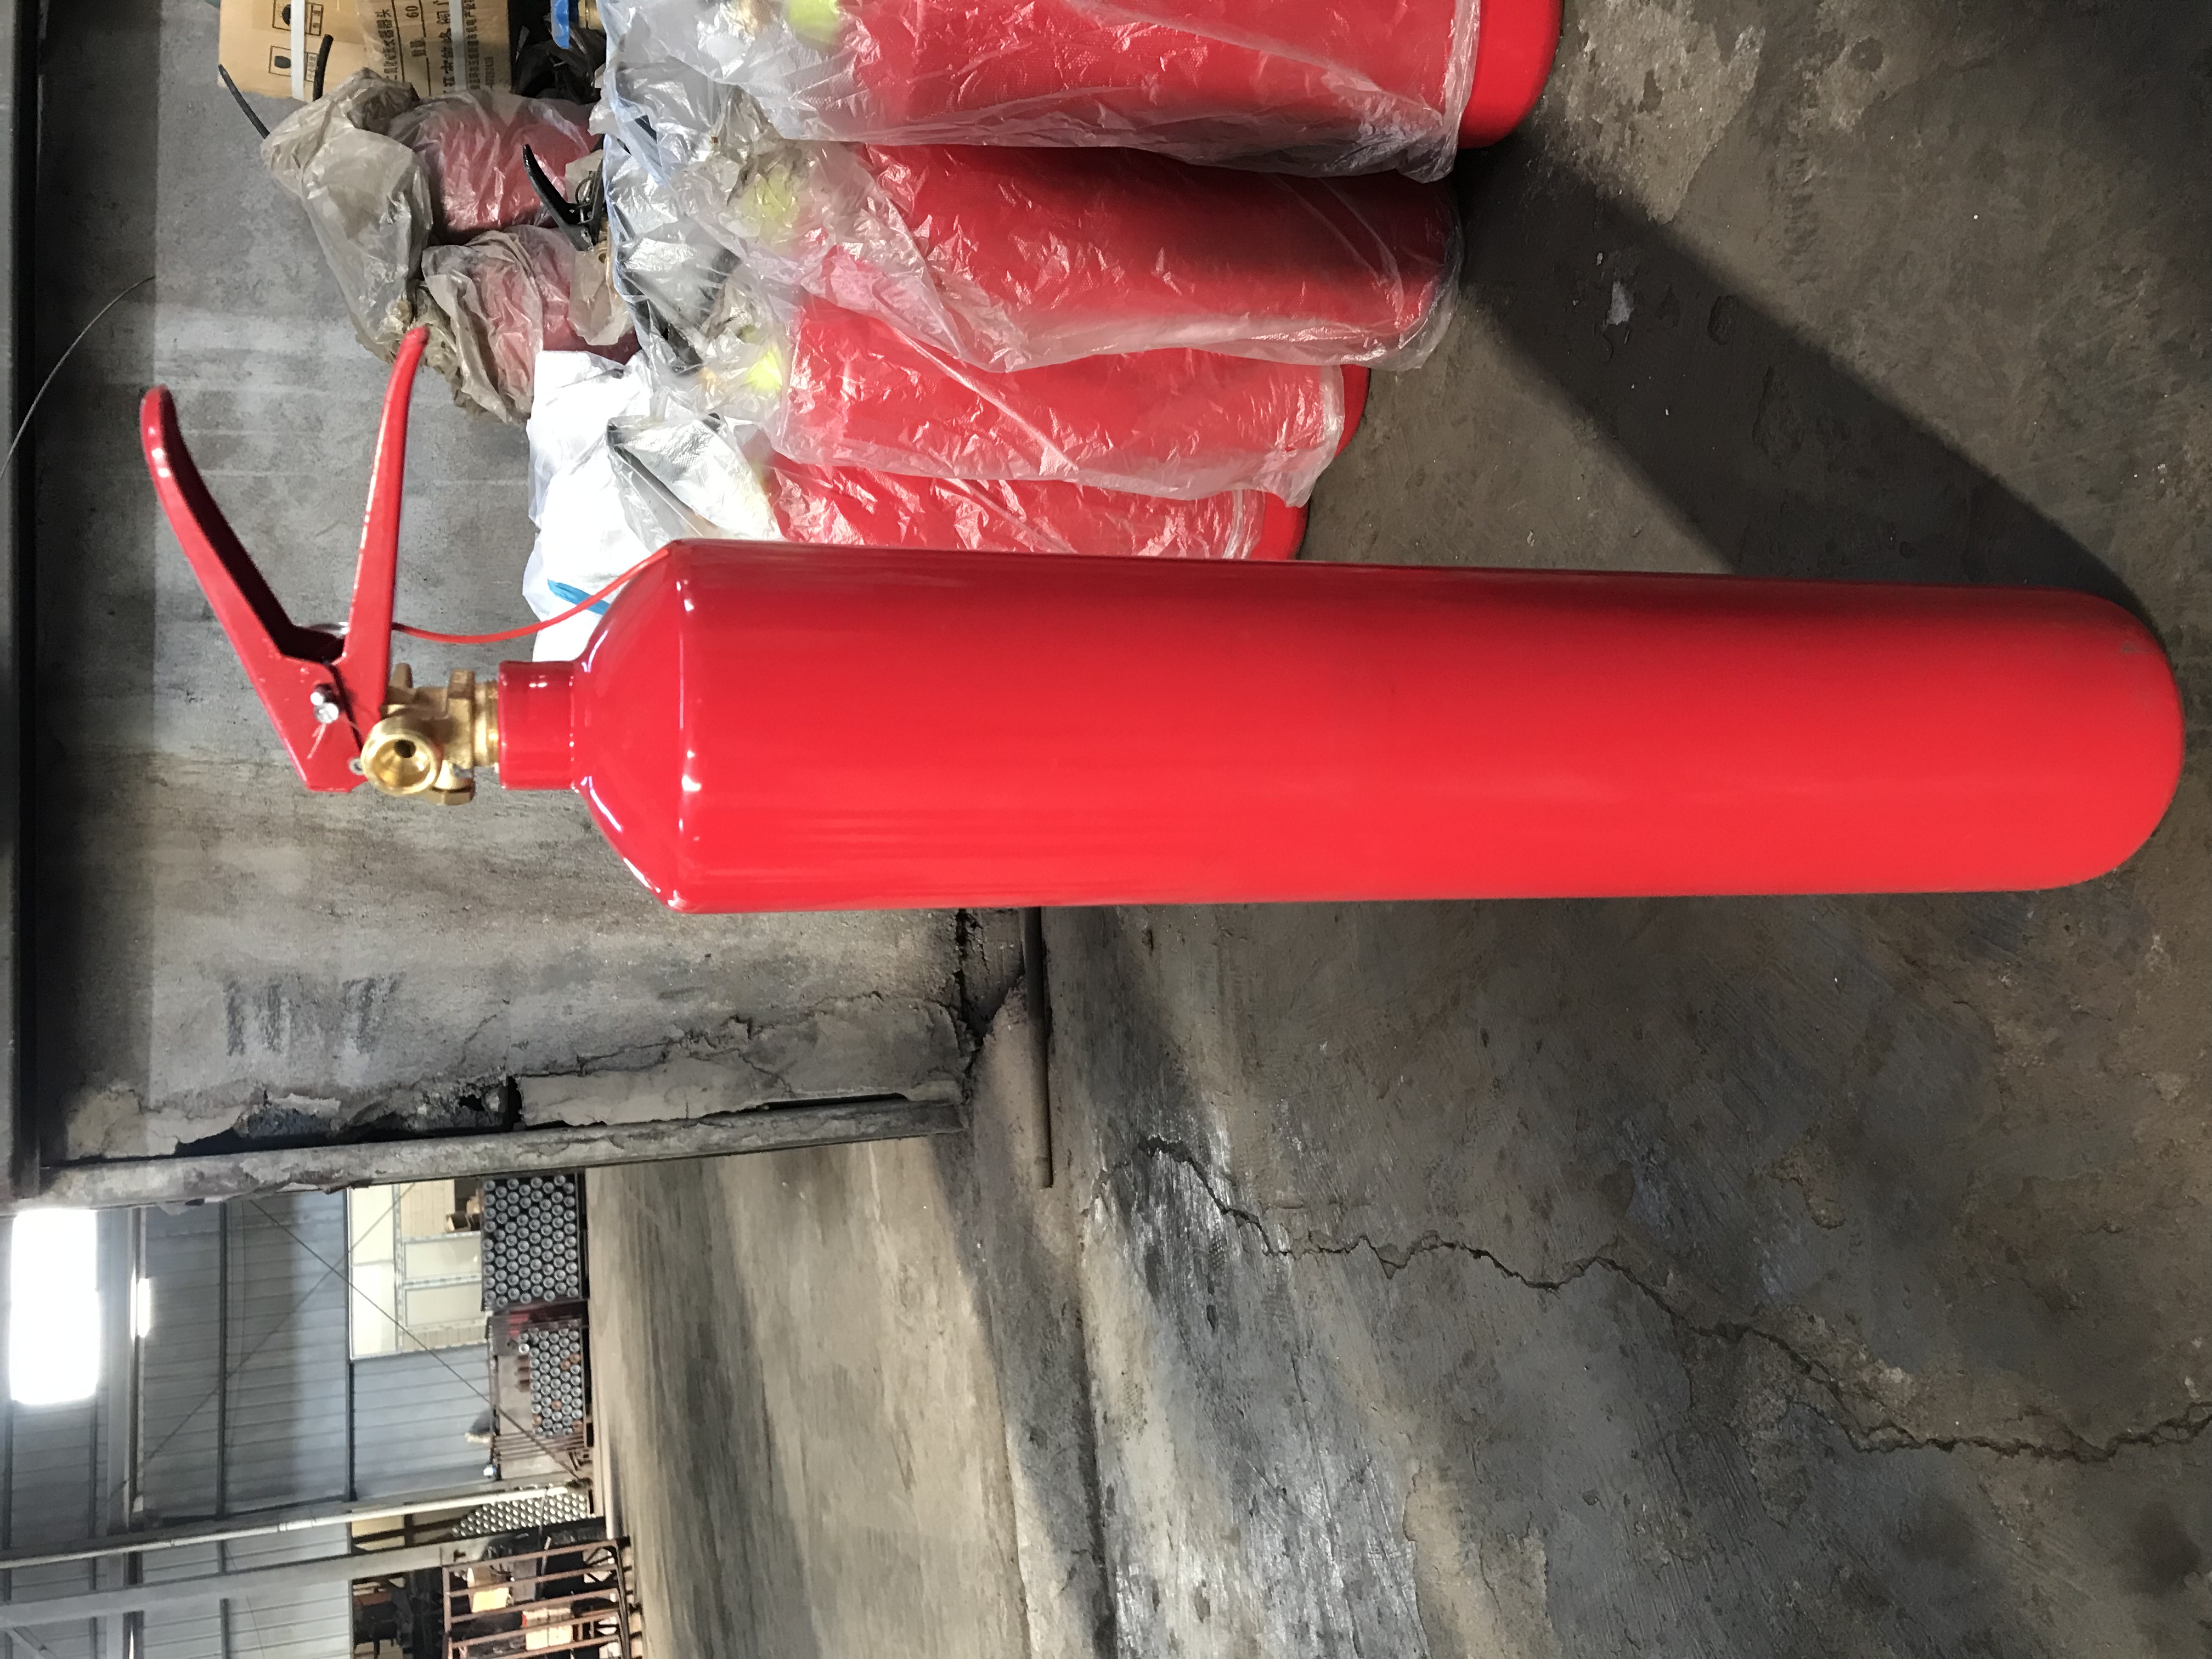 5KG CO2 Fire Extinguisher For Vietnam 